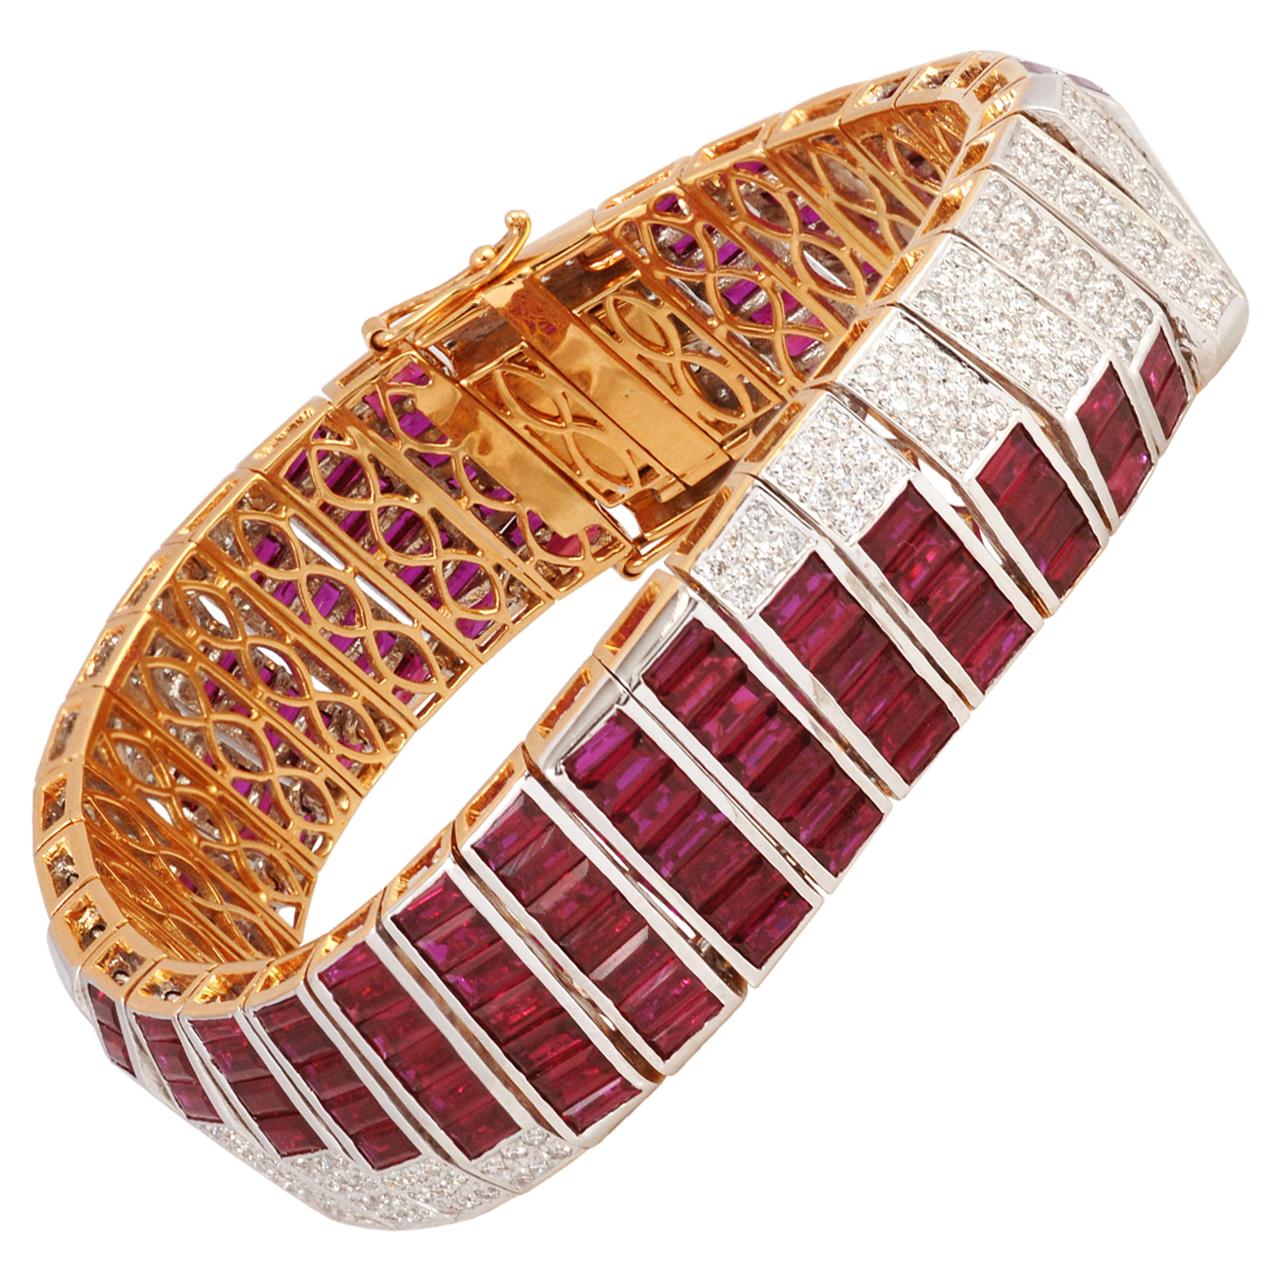 Ruby with Diamond Bracelet Set in 18 Karat Gold Settings